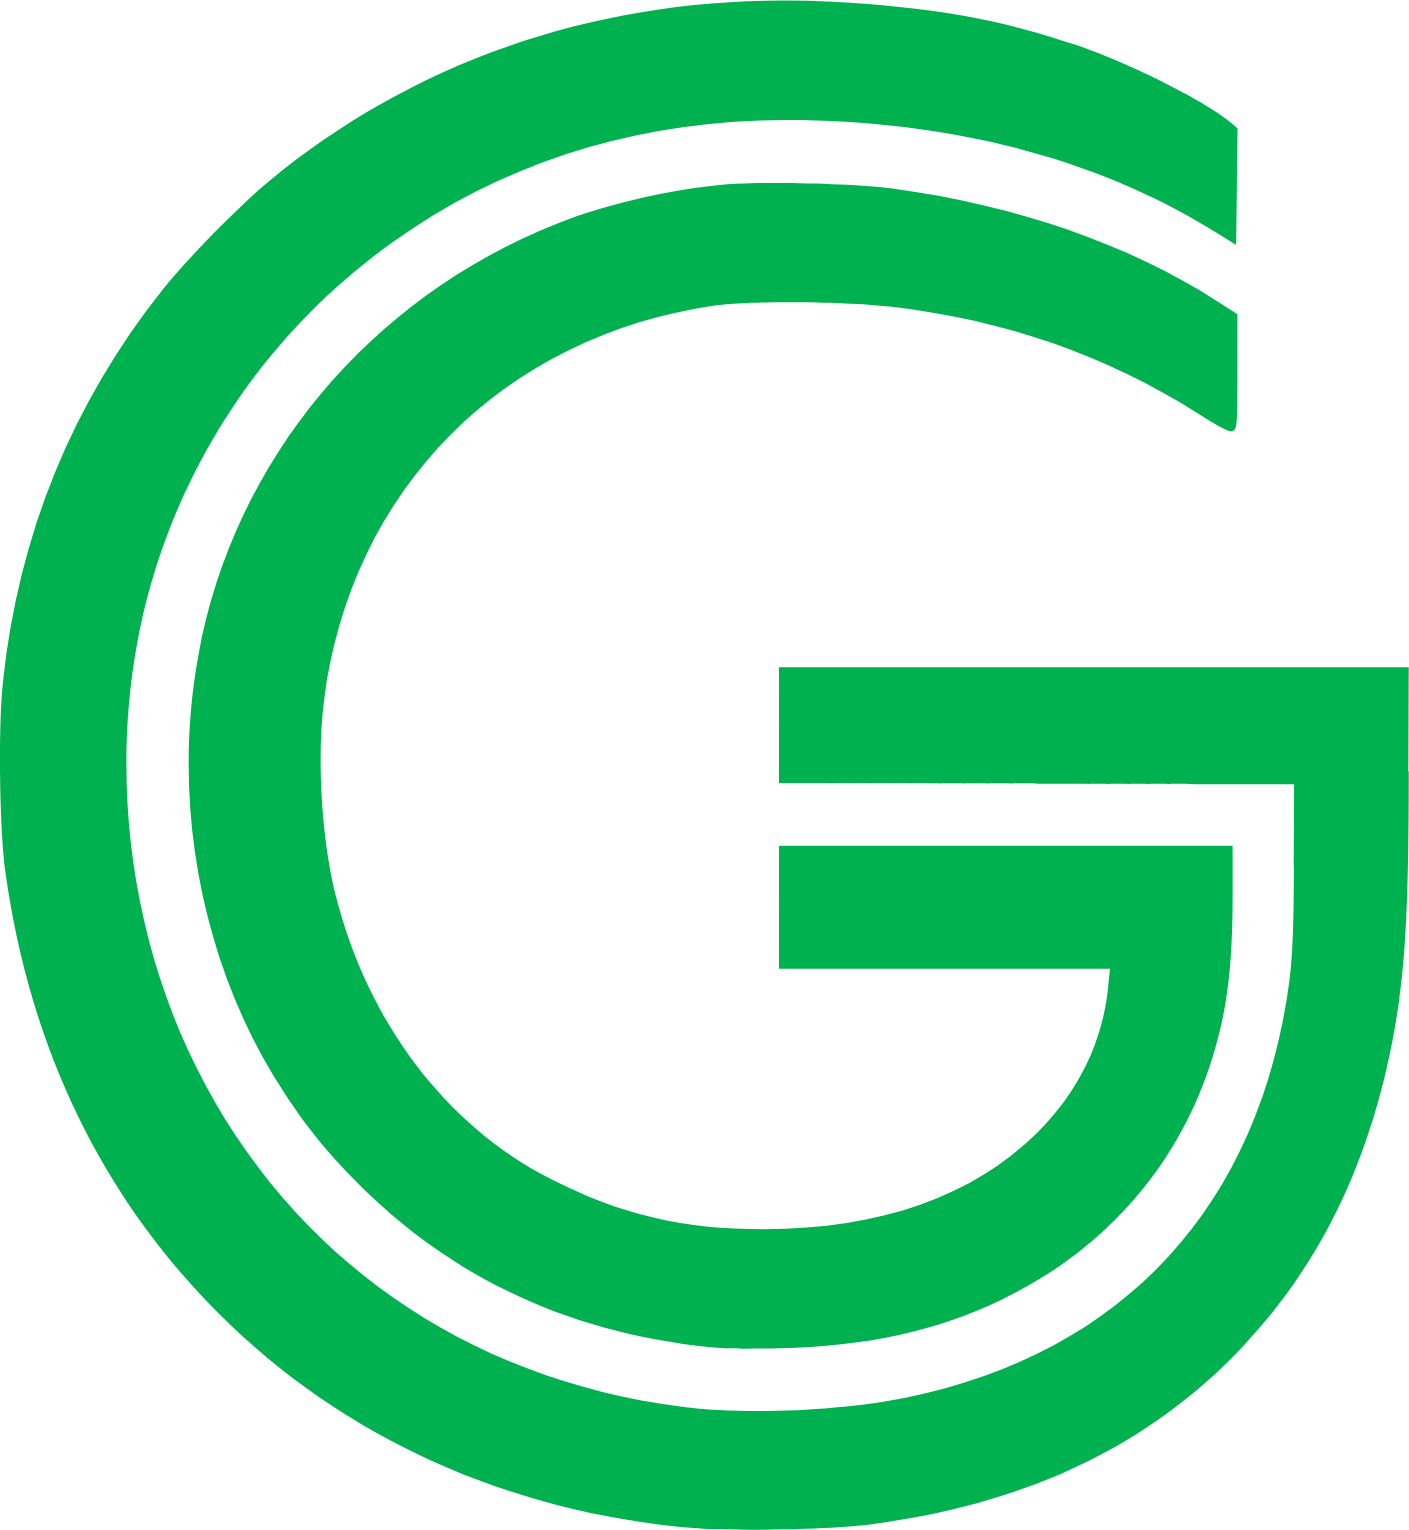 Grab Holdings logo (PNG transparent)